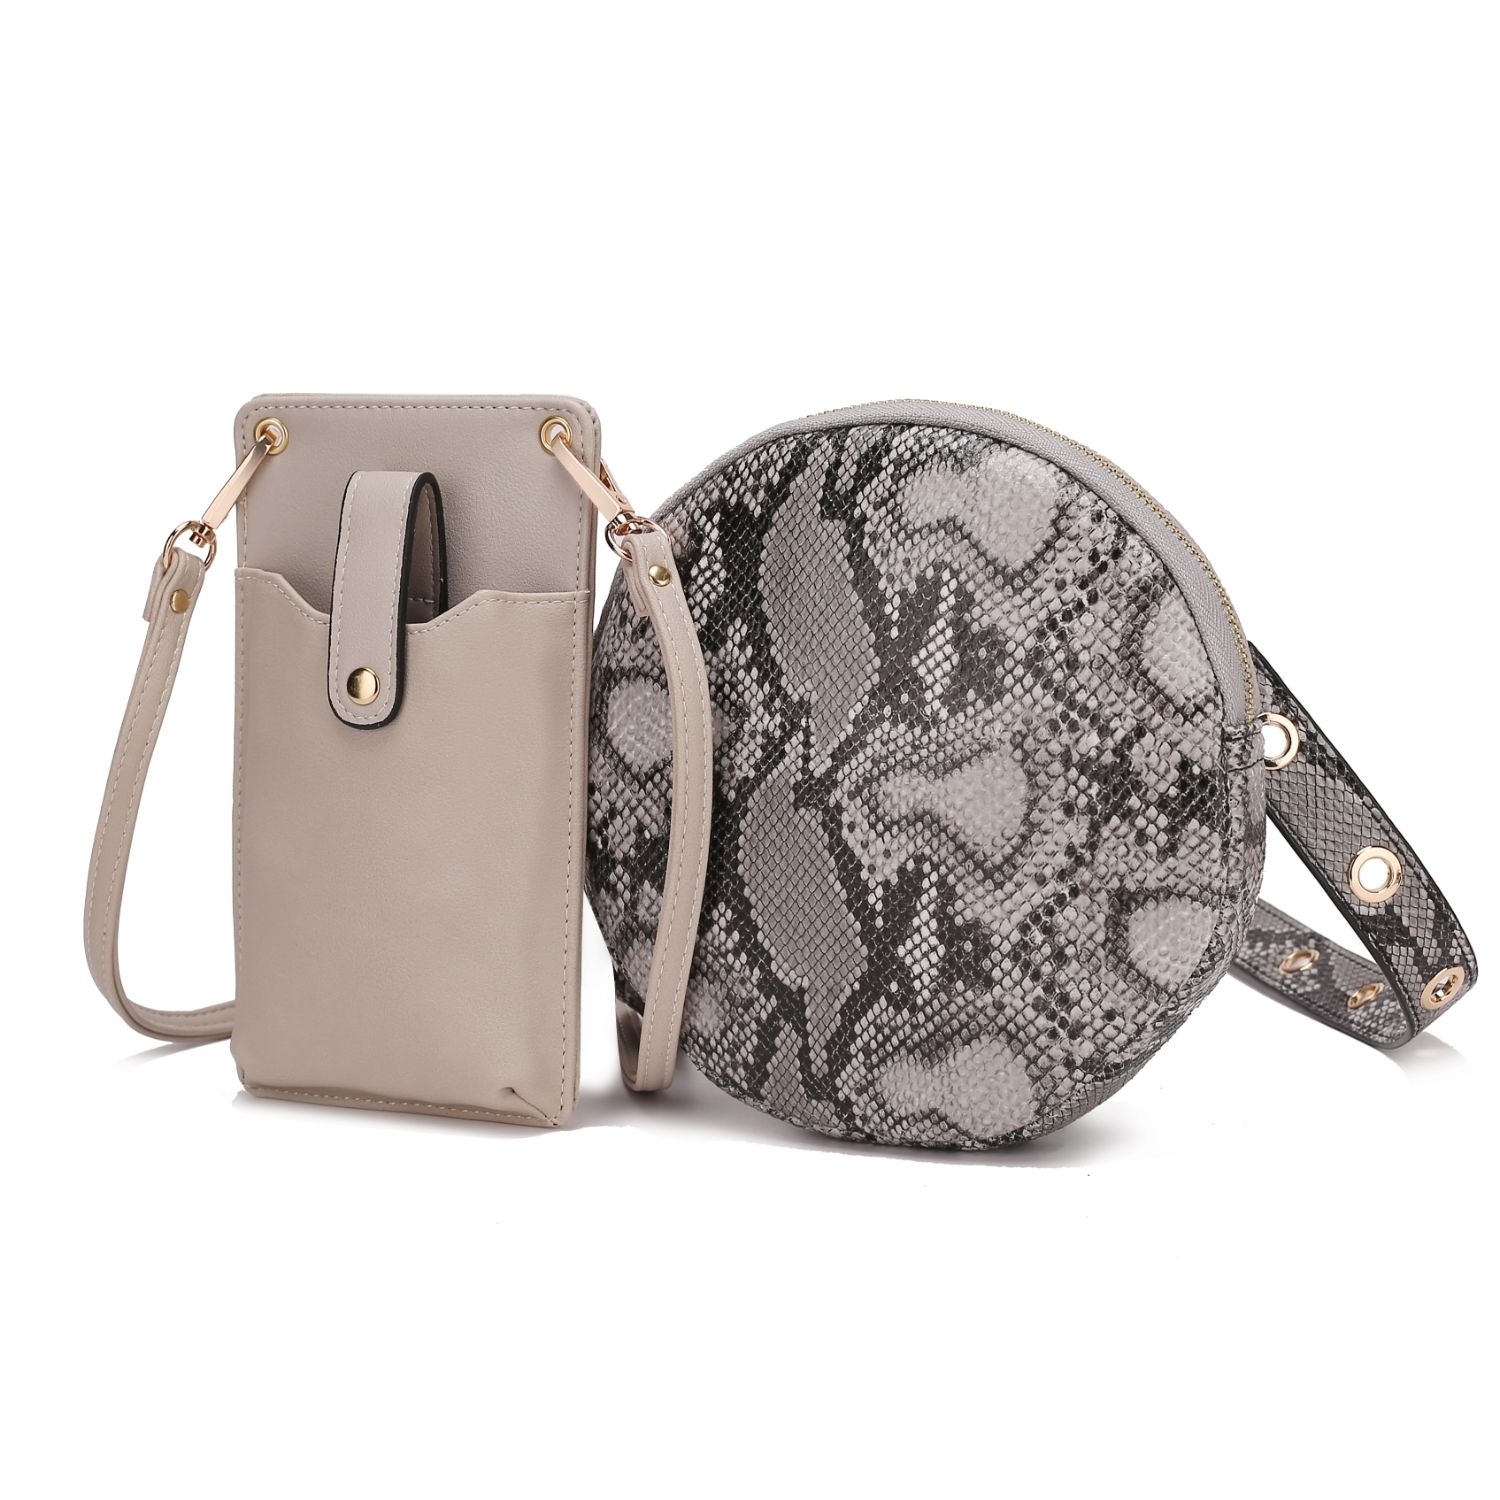 MKF Collection Hailey Smartphone Convertible Crossbody Handbag (2 PCS SET) By Mia K. - Beige